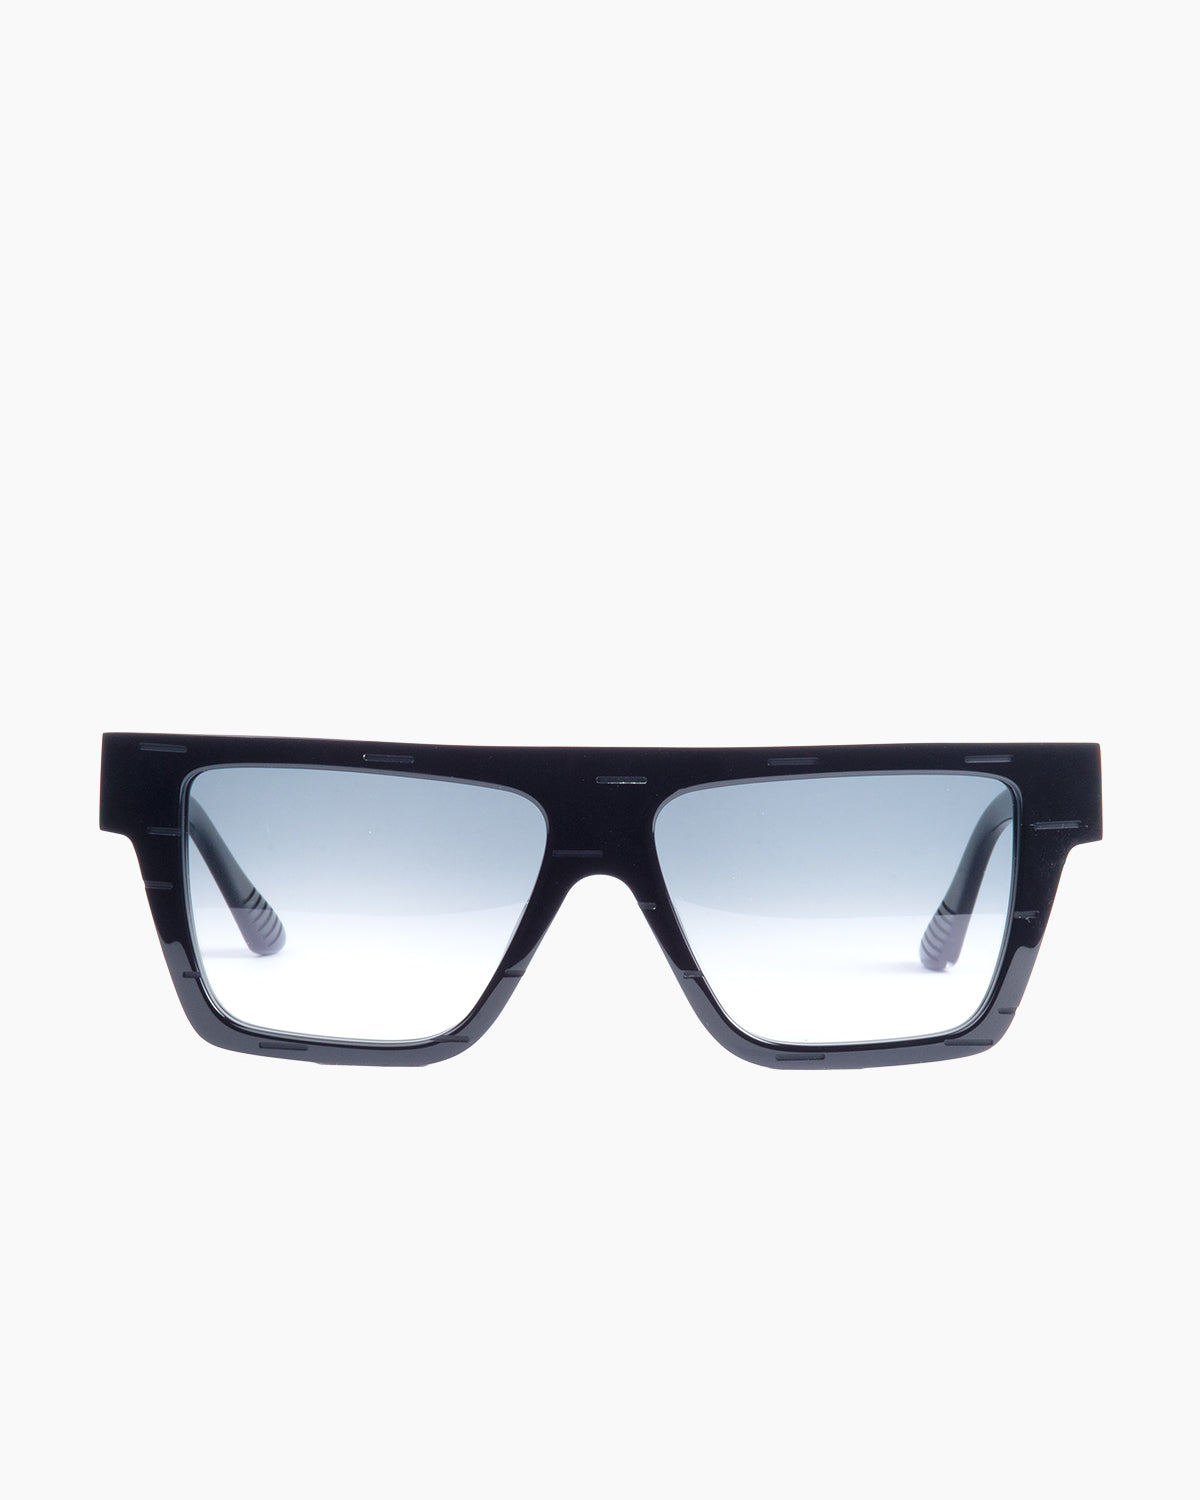 Yohji Yamamoto - Slook002 - A001 | glasses bar:  Marie-Sophie Dion